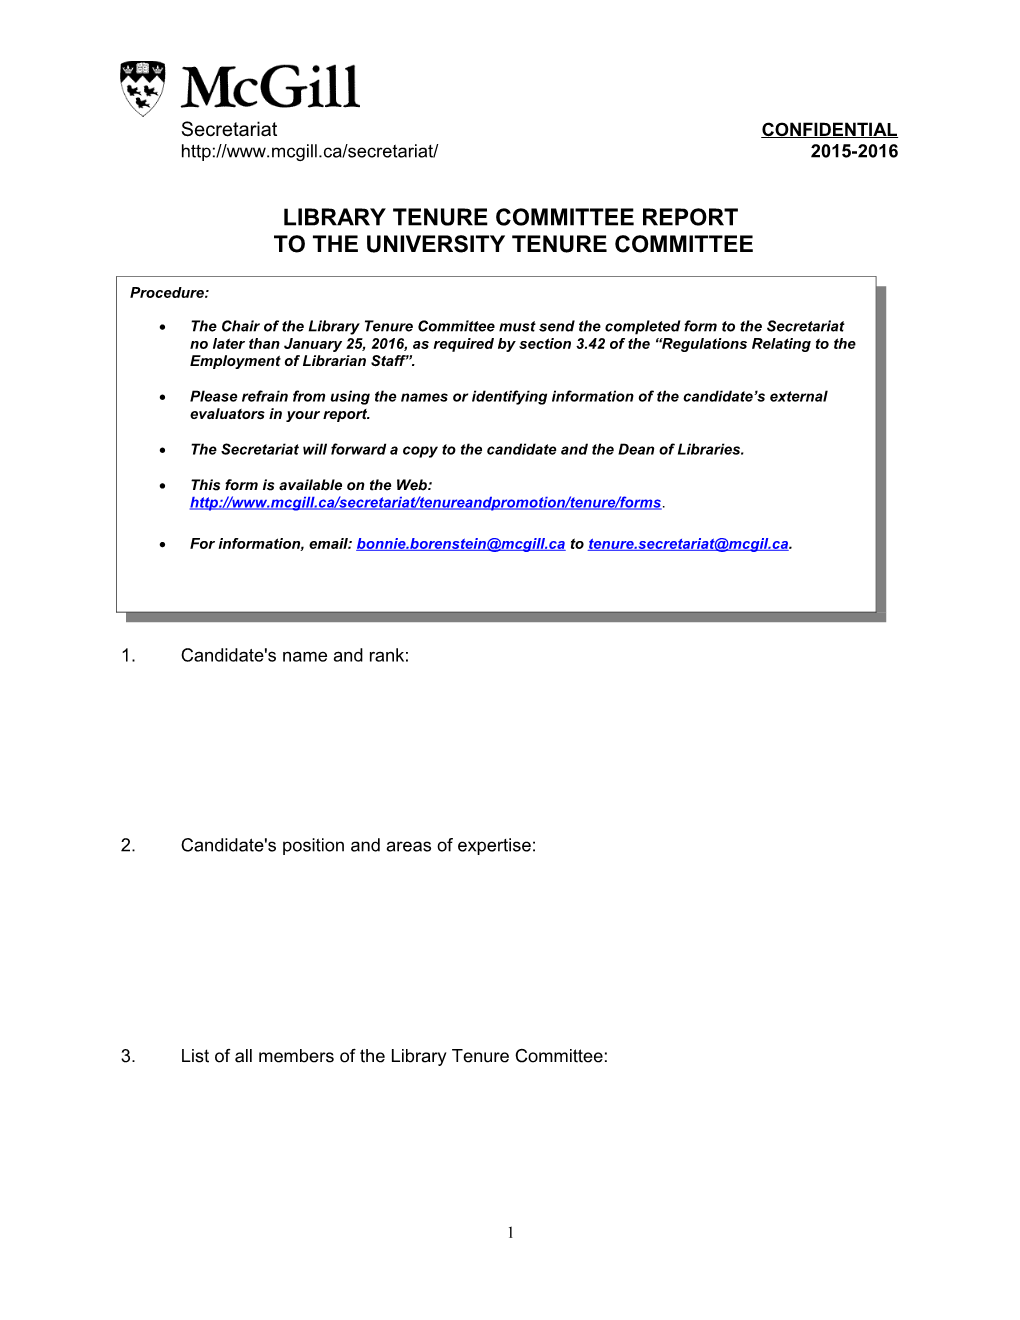 Library Tenure Committee Report